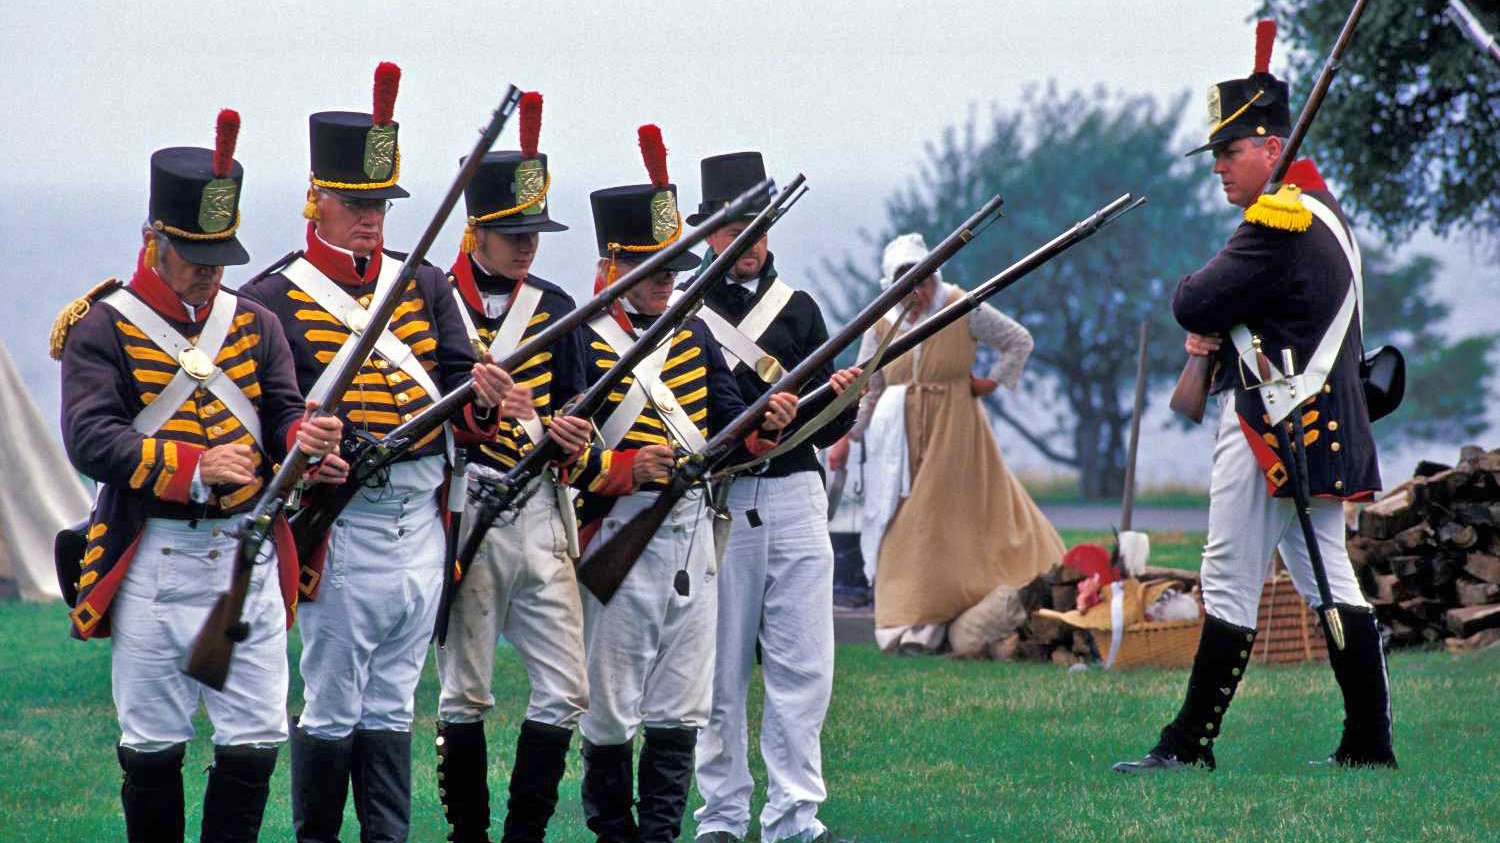 Photo of reenactors in uniform loading rifles on the Sackets Harbor Battlefield